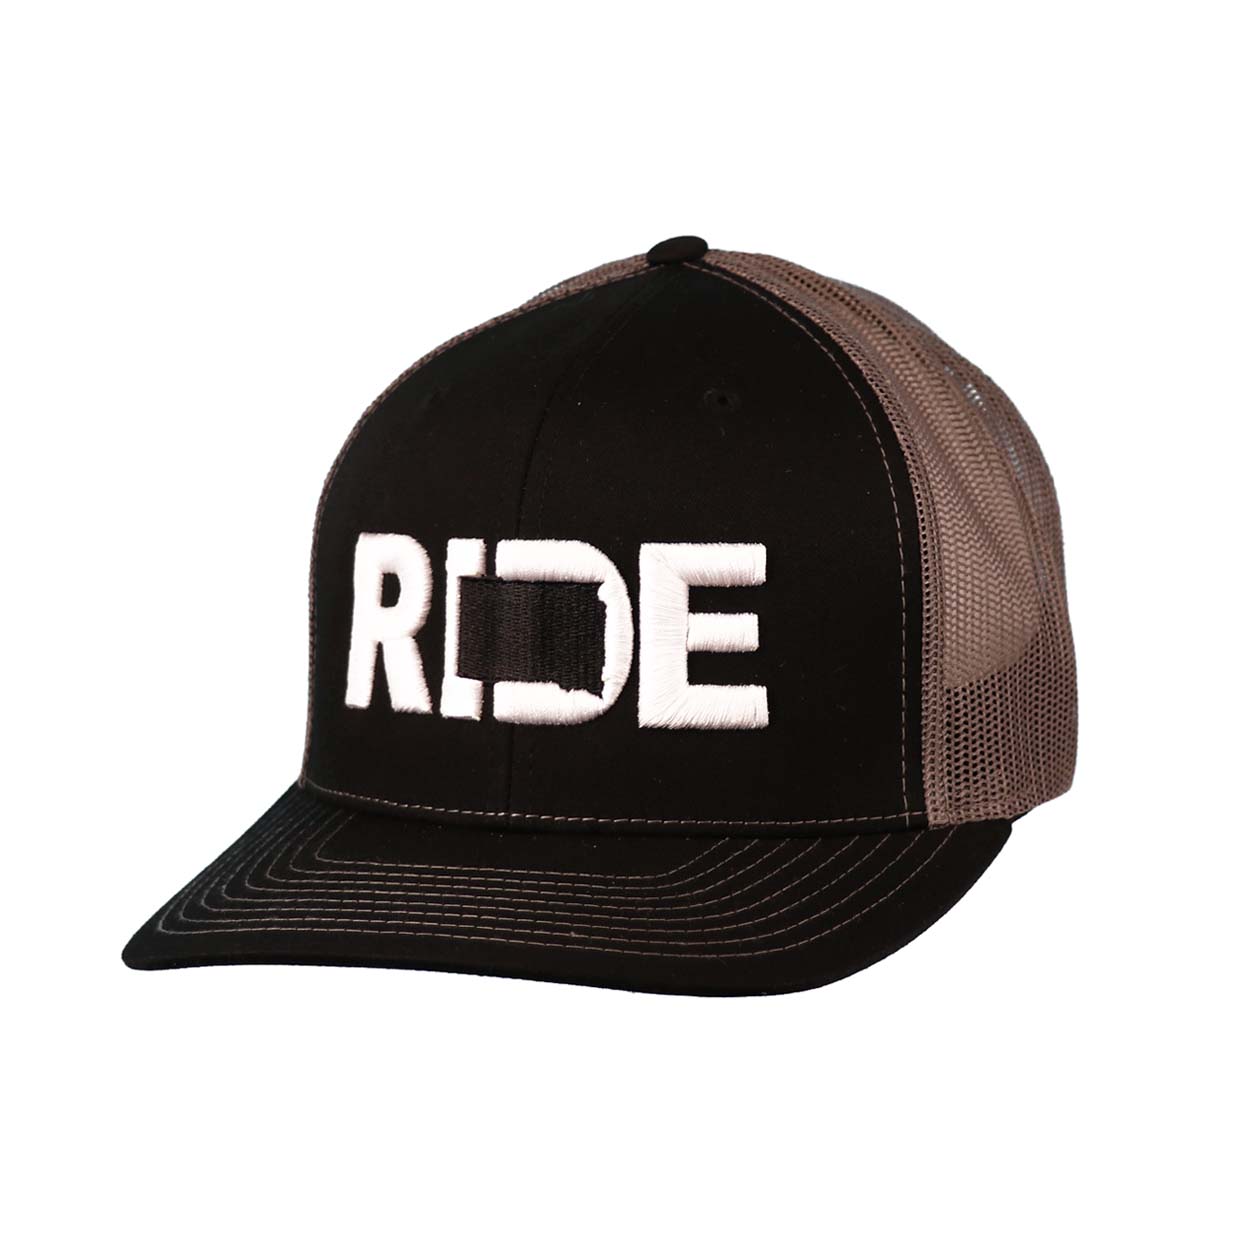 Ride South Dakota Classic Embroidered Snapback Trucker Hat Black/Gray